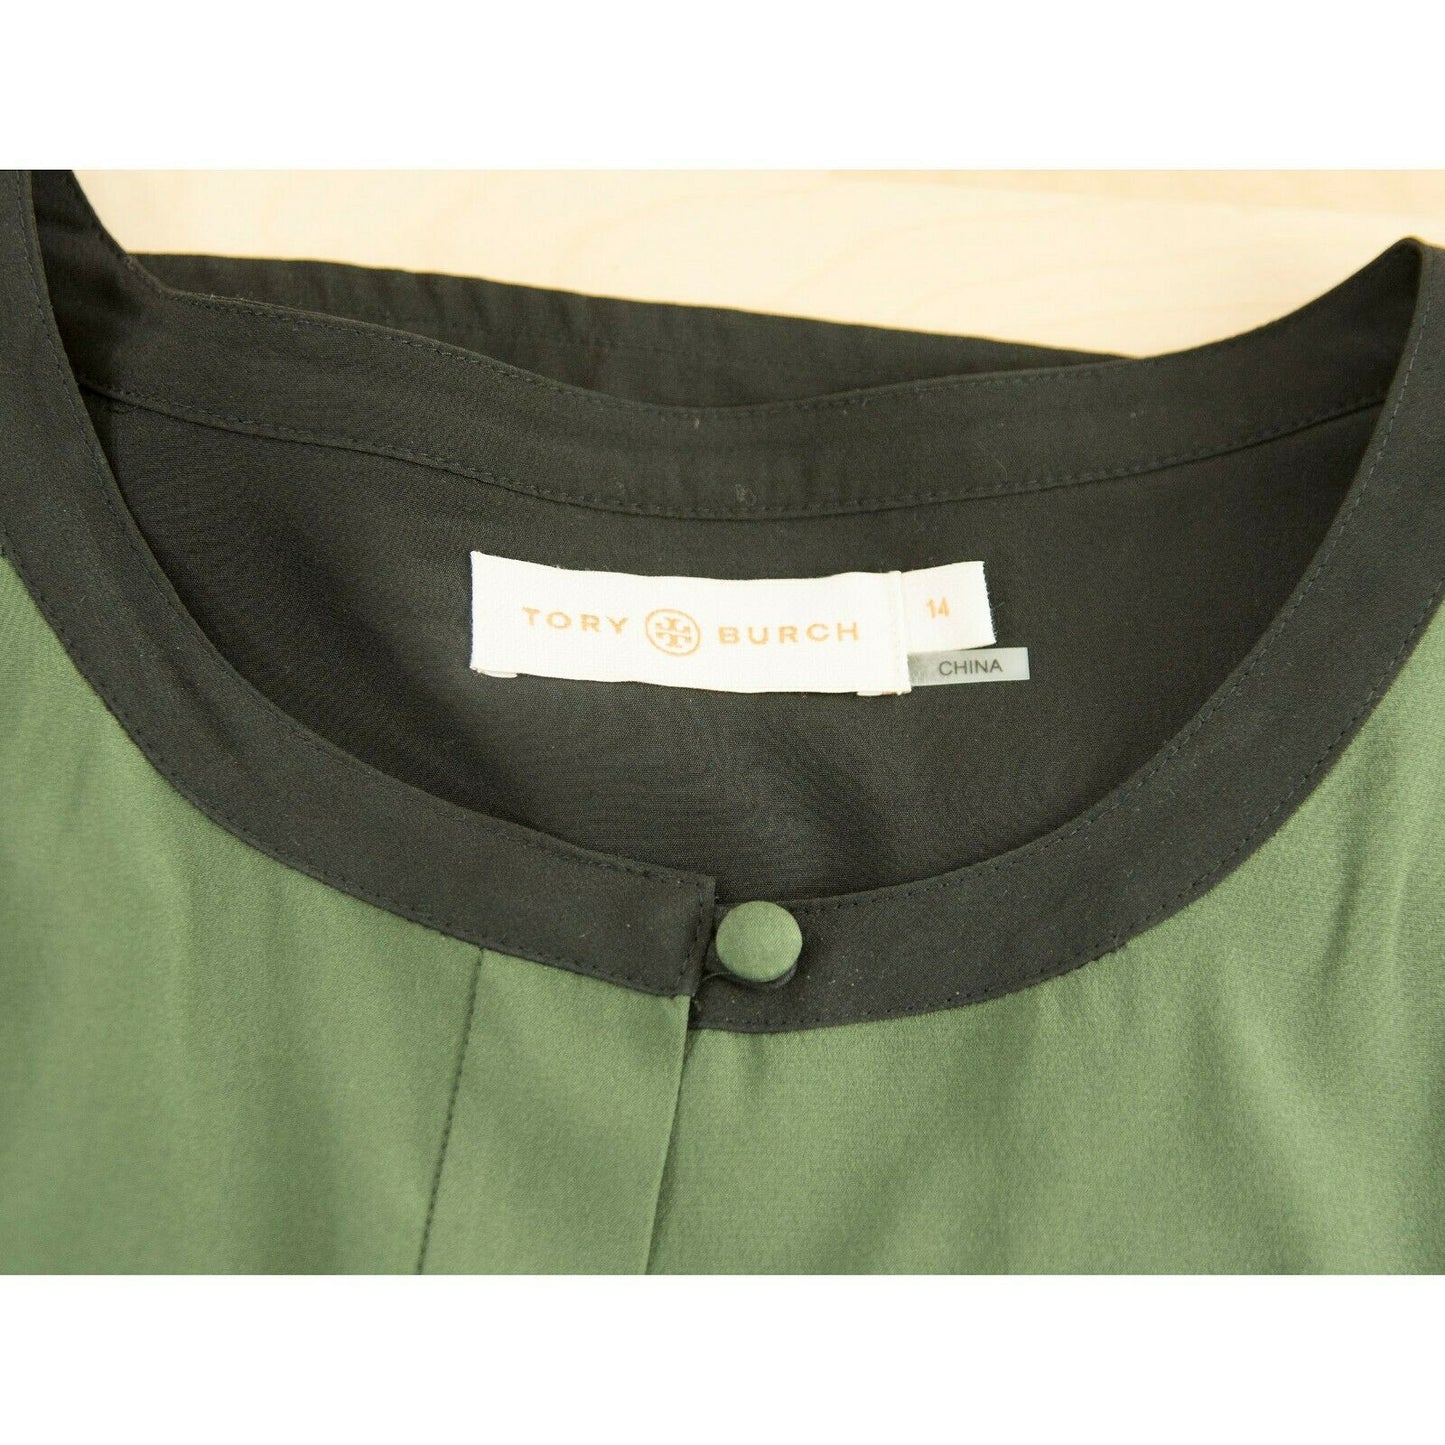 Tory Burch Green Black Colorblock Silk Button Down Blouse Top 14 NWOT